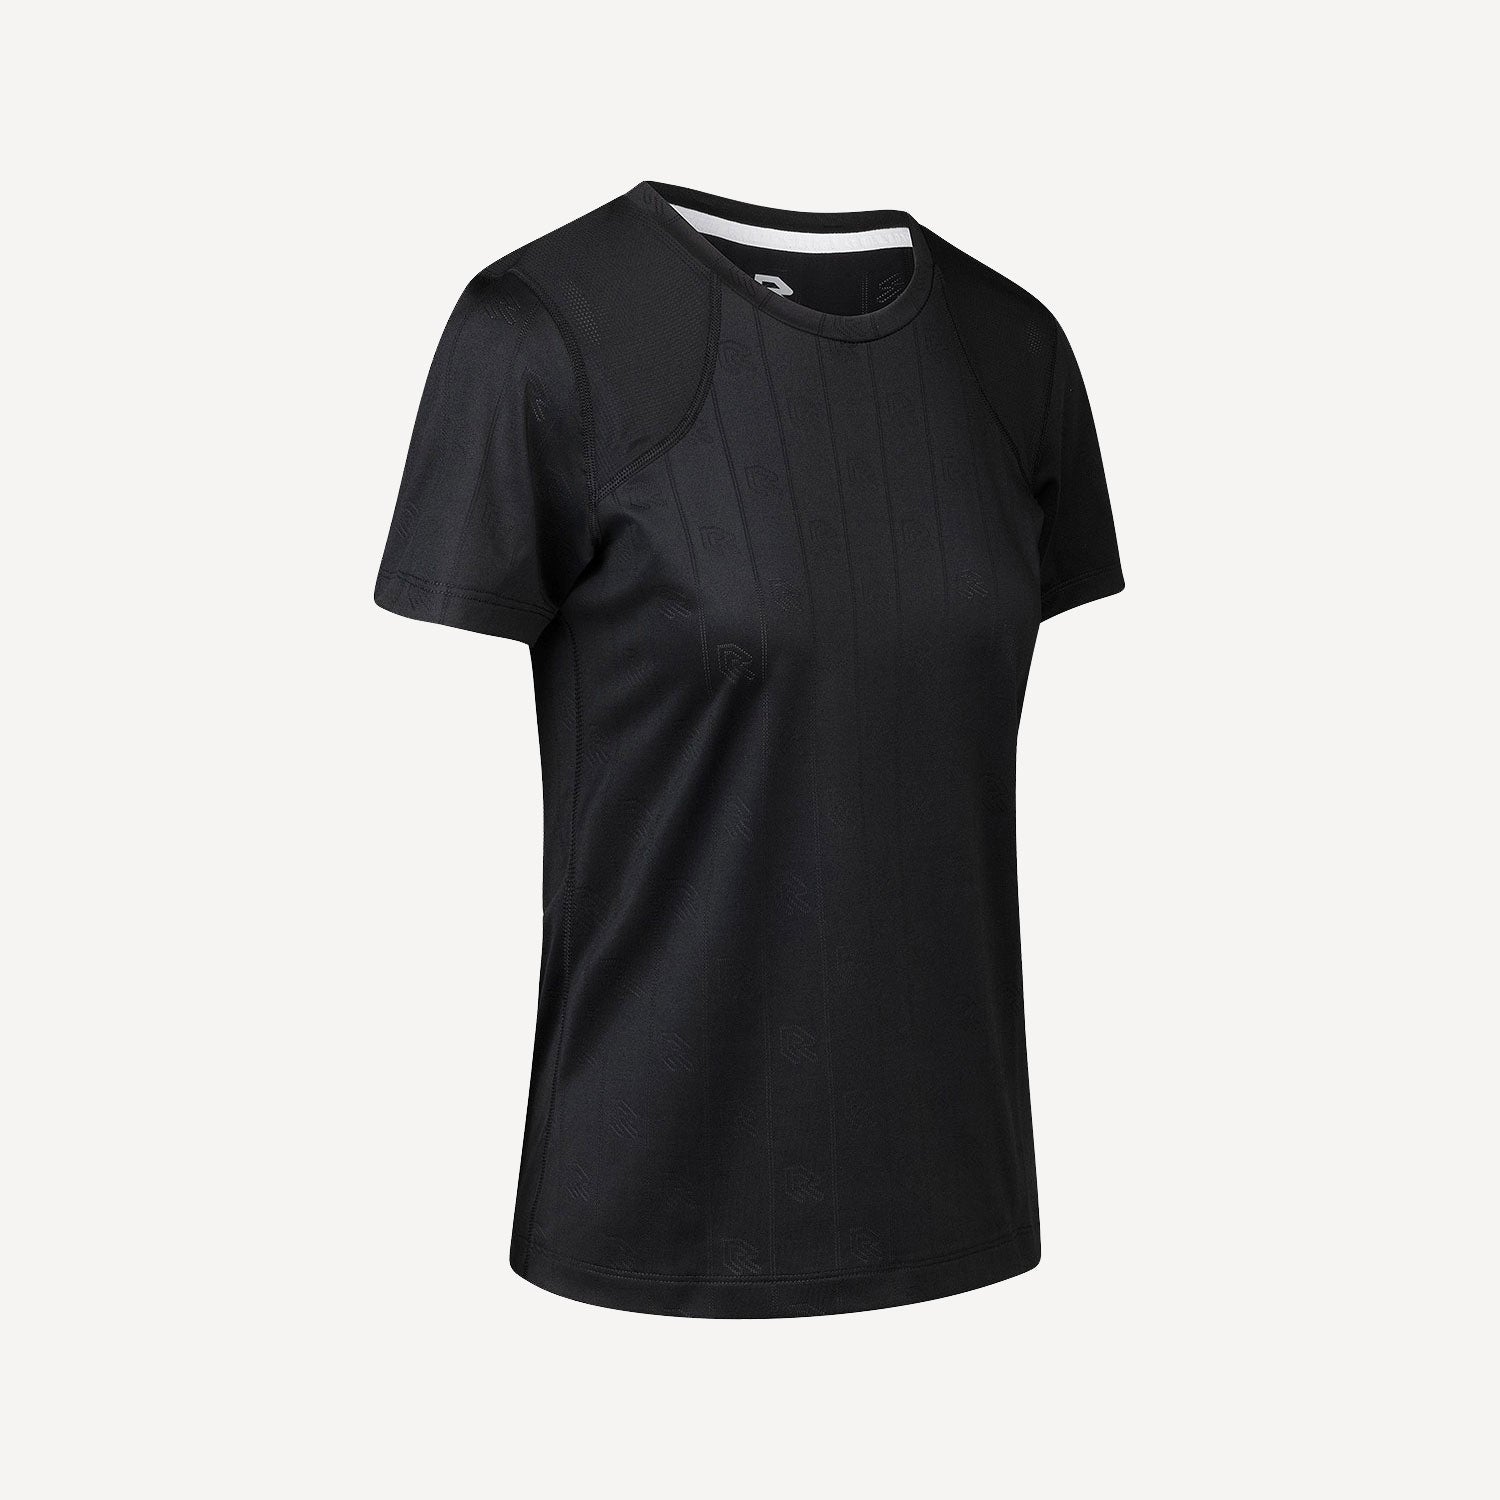 Robey Ace Women's Tennis Shirt - Black (3)